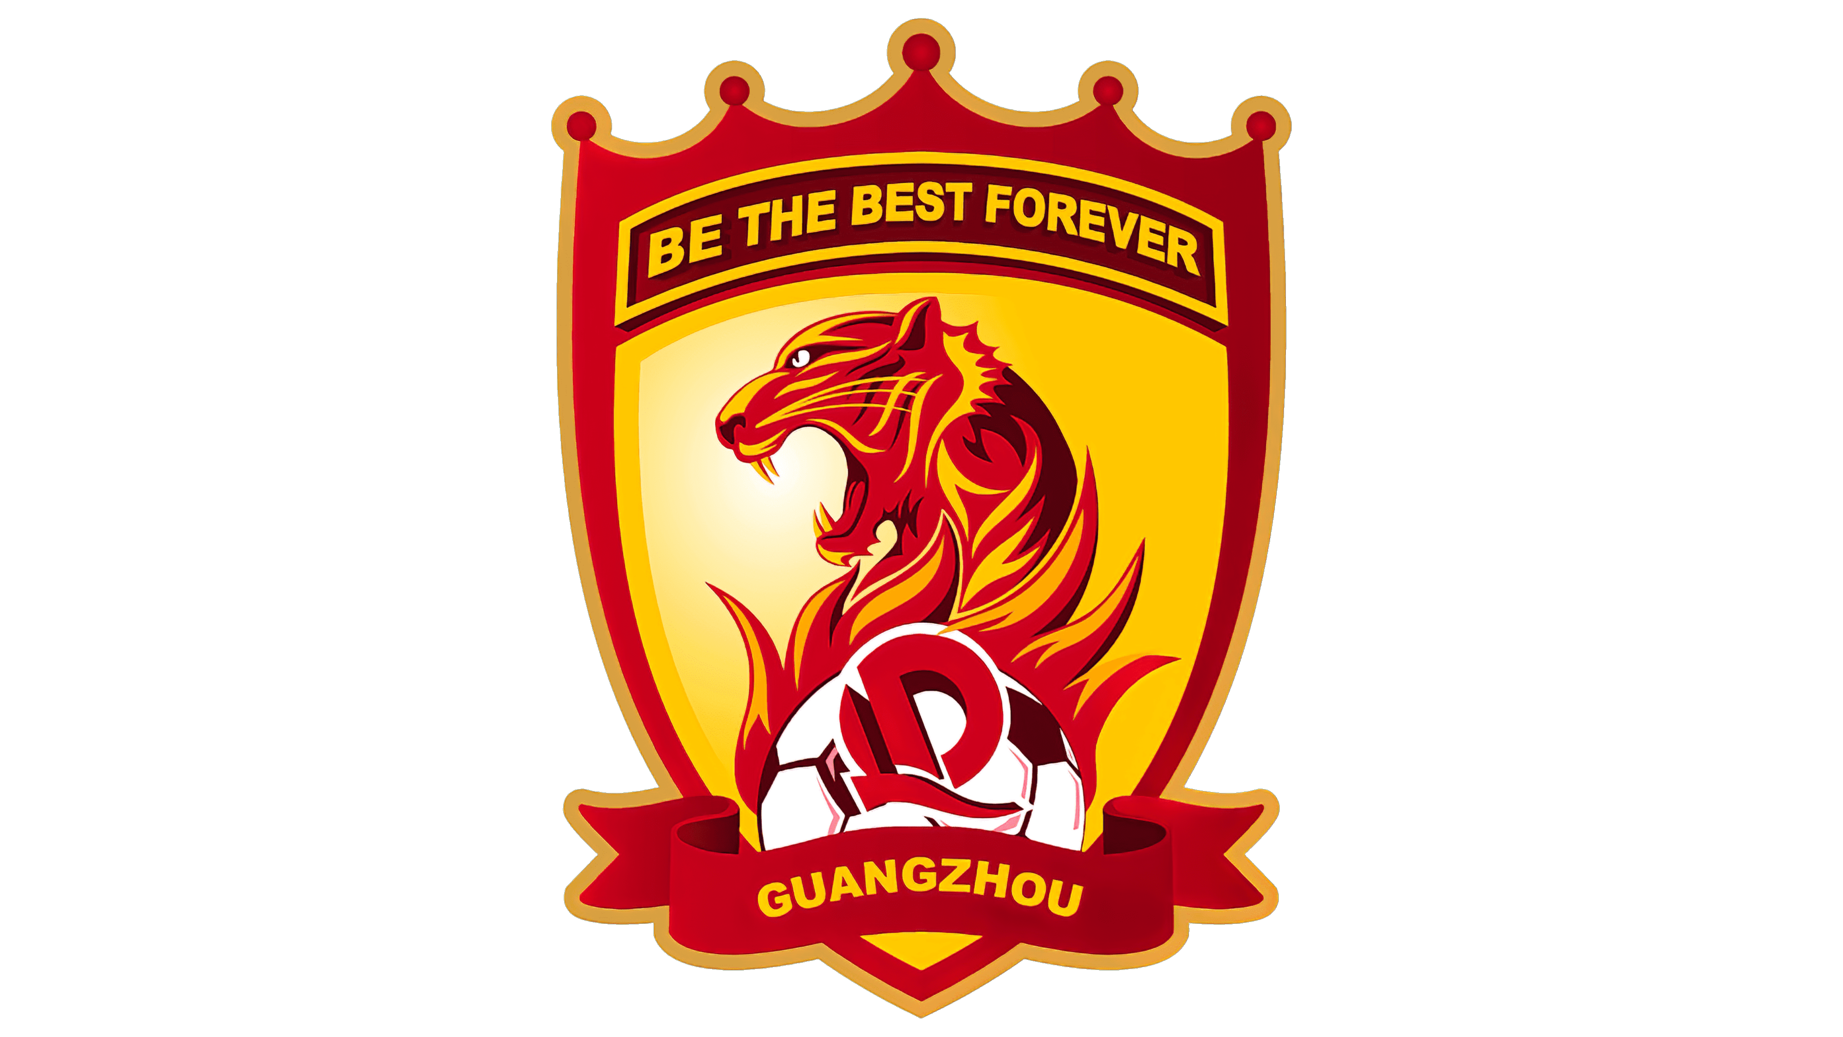 Guangzhou evergrande logo